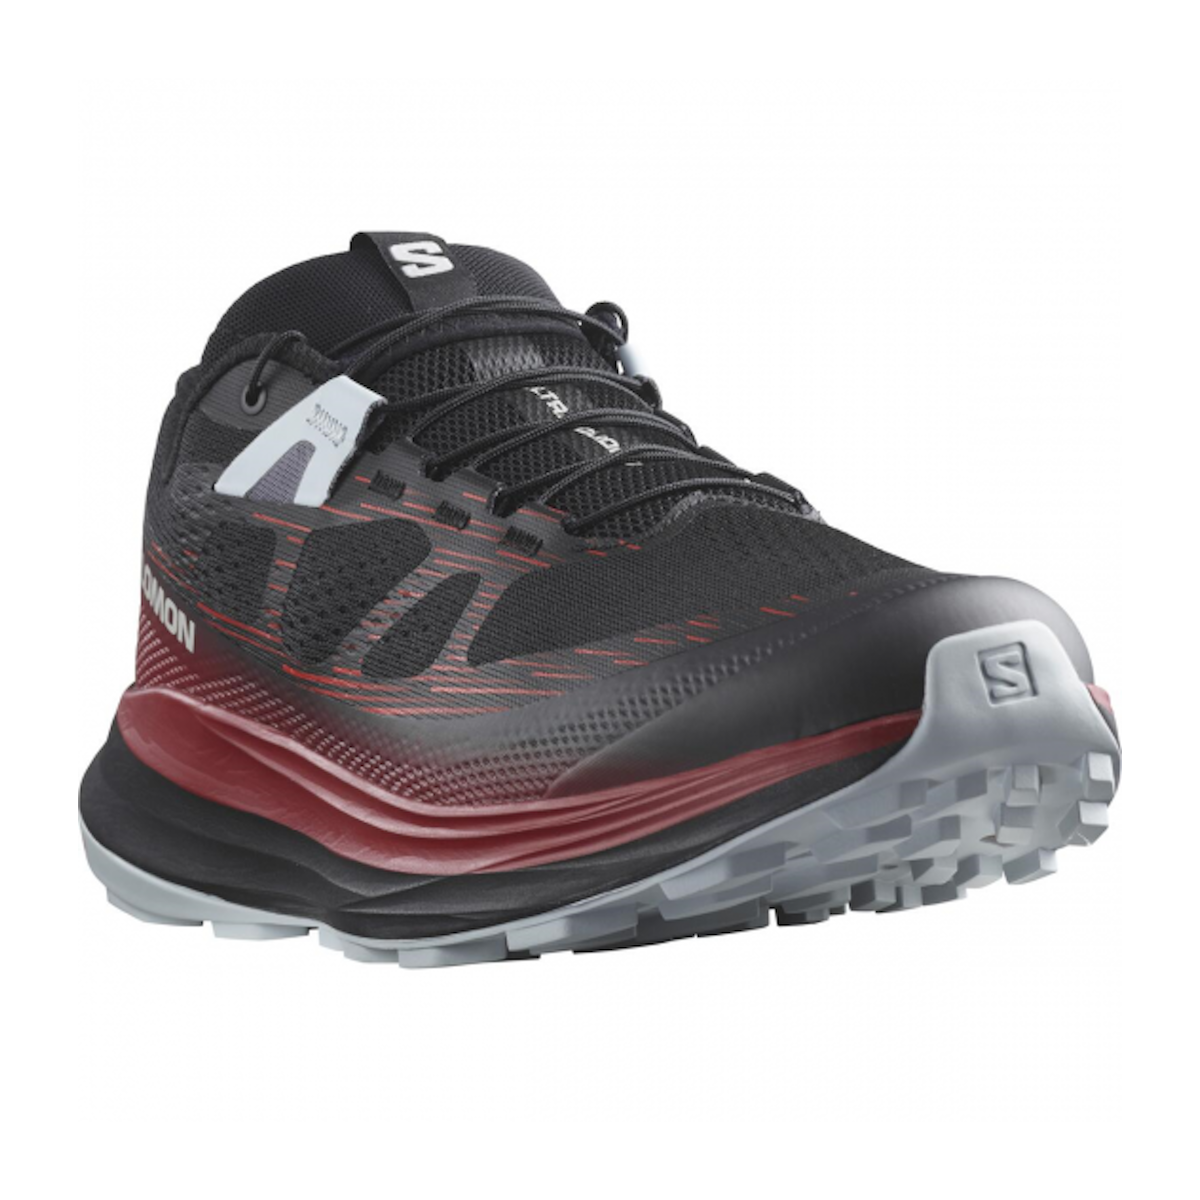 SALOMON ULTRA GLIDE 2 trail running shoes - red/black/grey